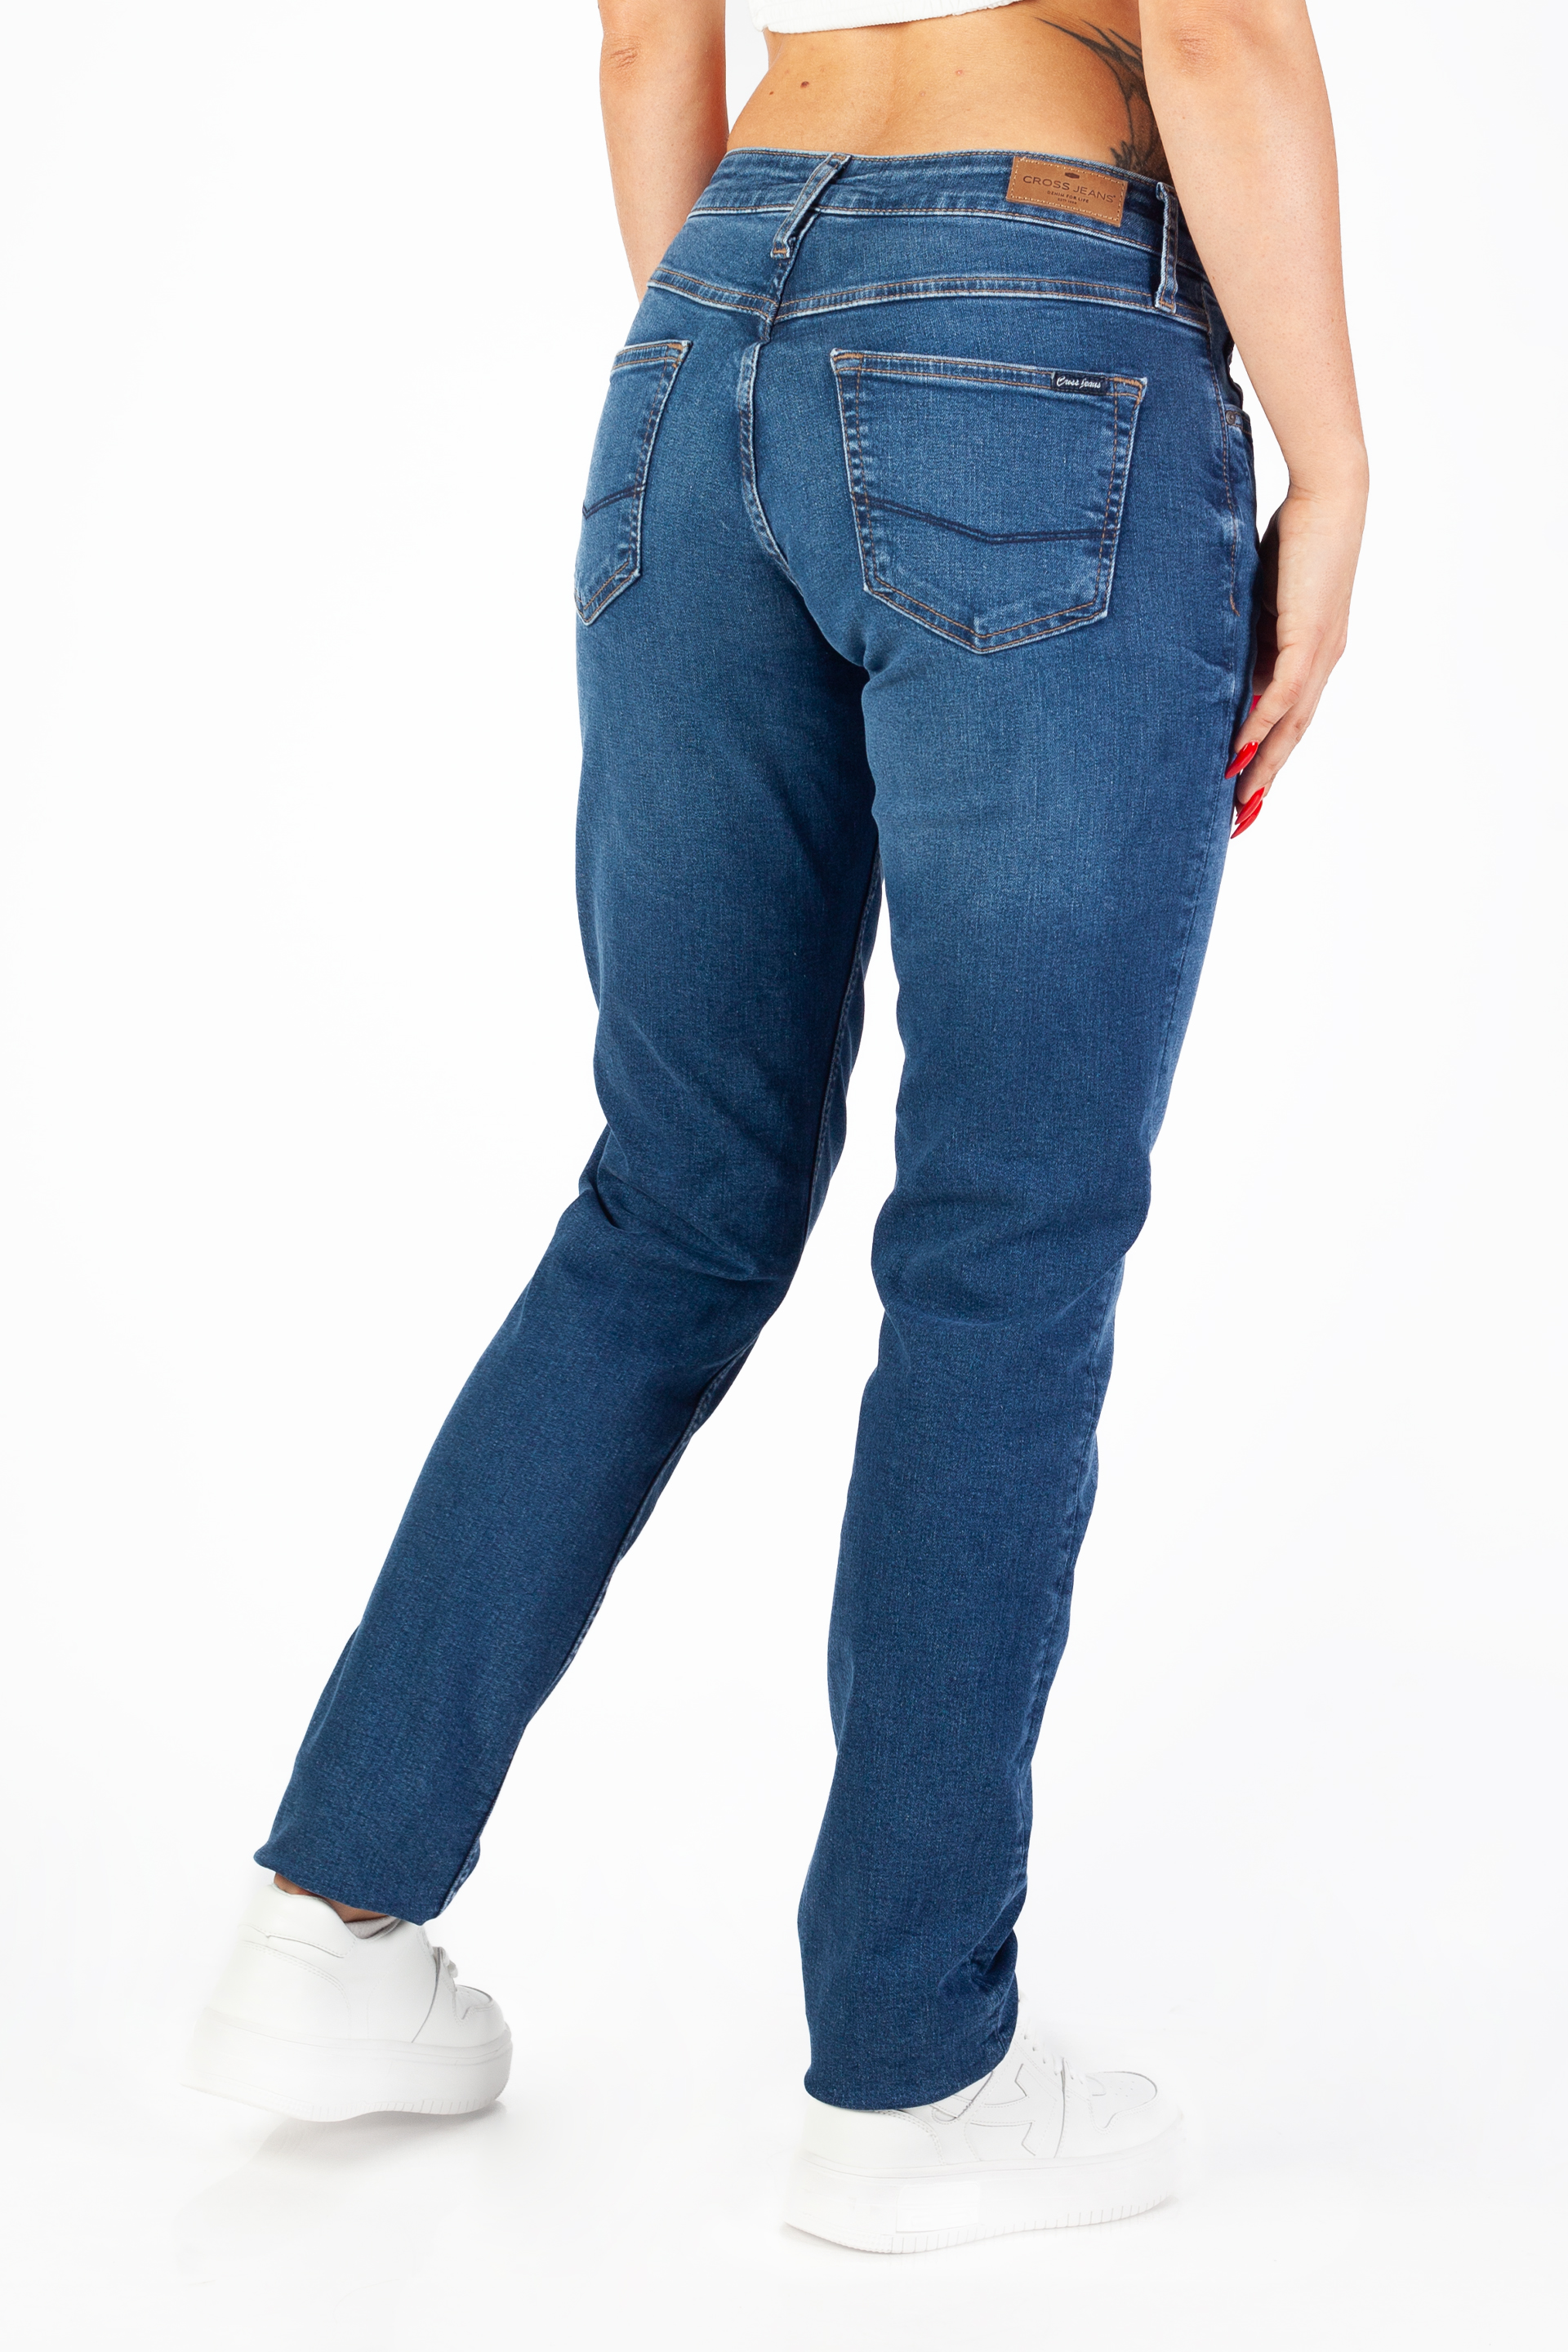 Jeans CROSS JEANS P437-013